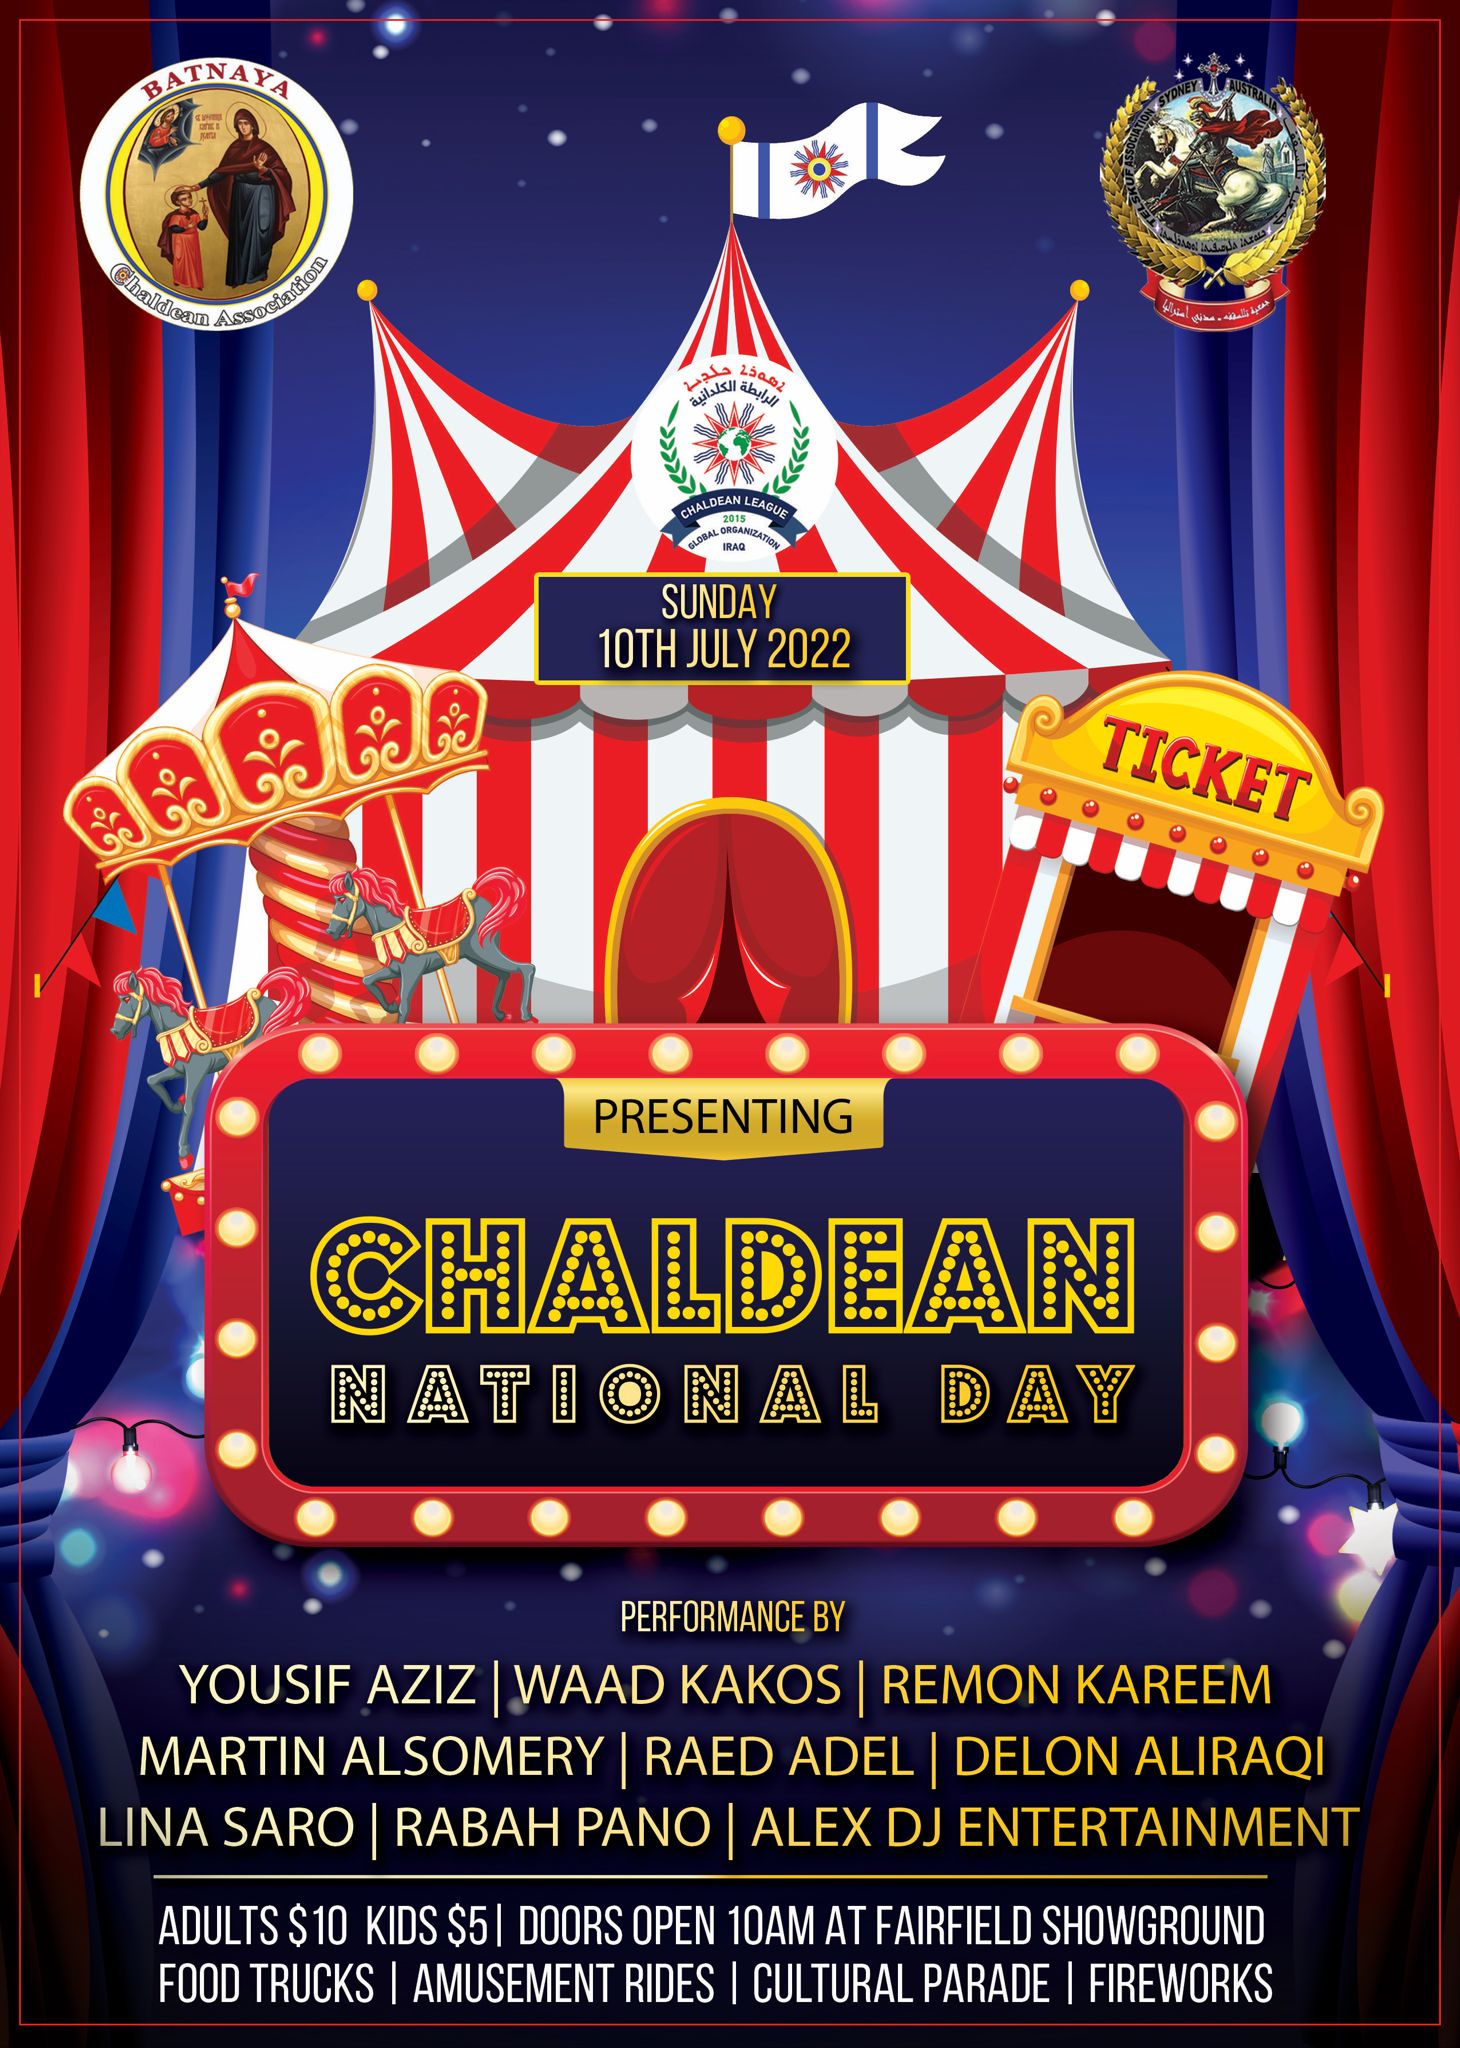 Chaldean National Day Festival